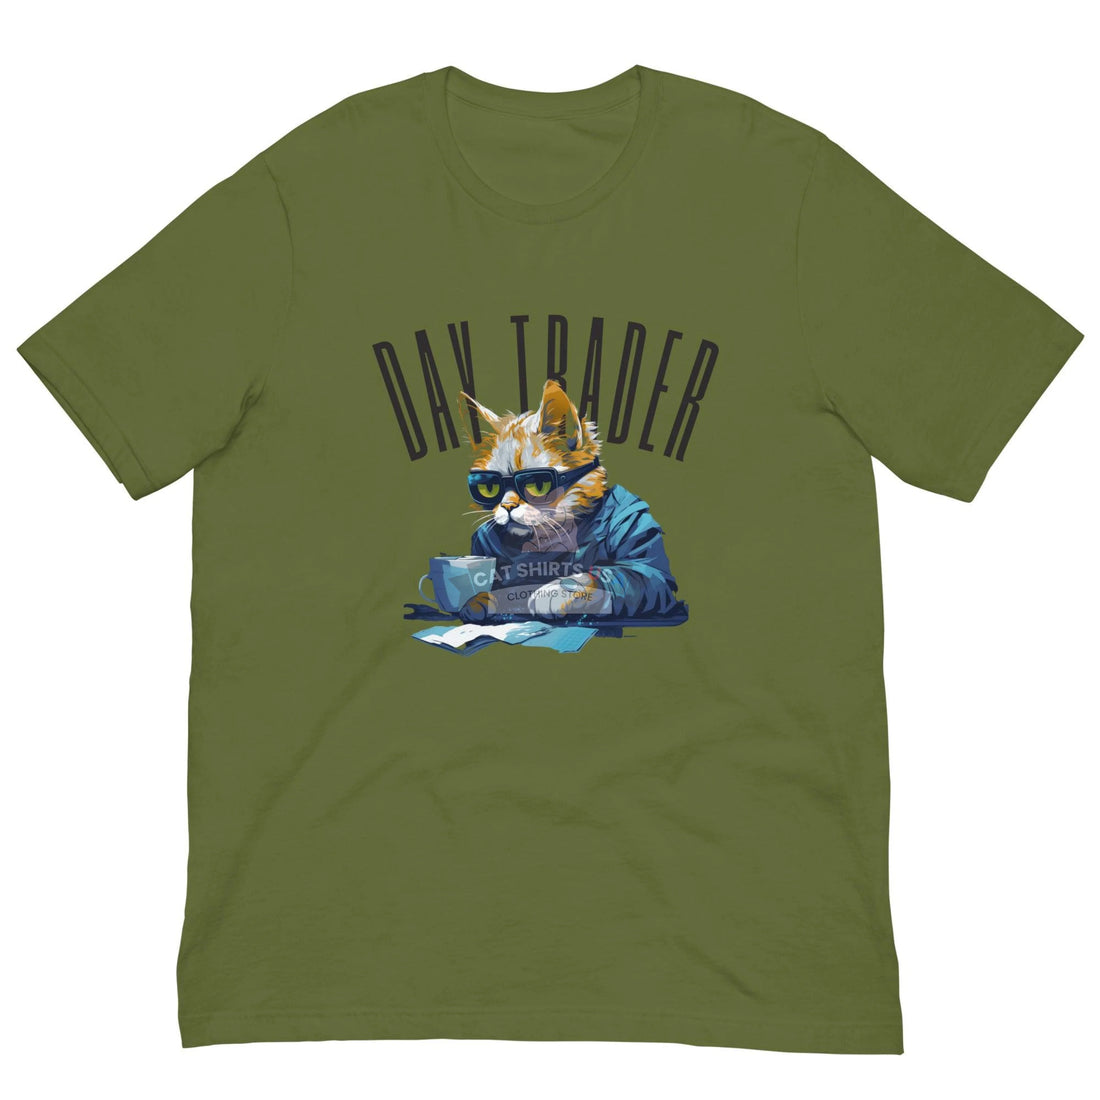 Day Trader Cat Shirt - Cat Shirts USA